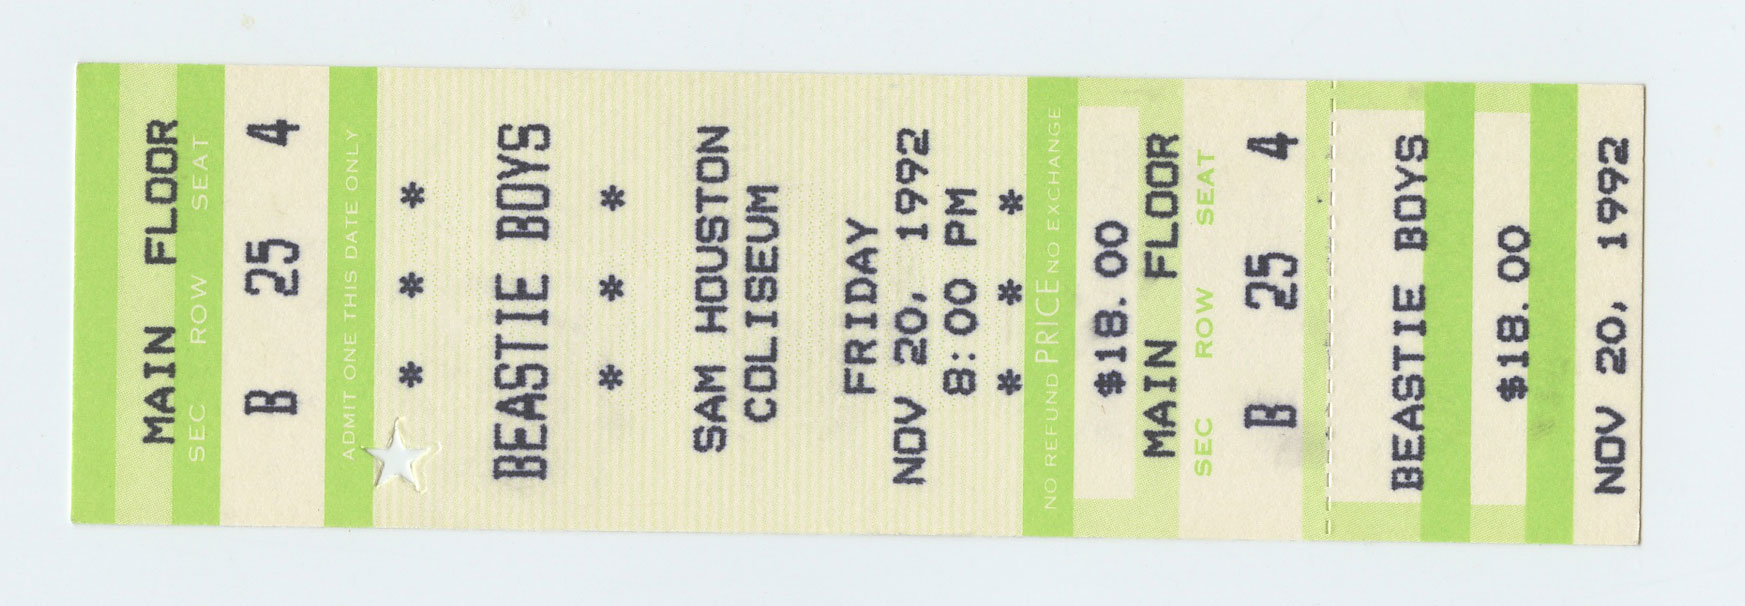 Beastie Boys Vintage Ticket 1992 Nov 20 Sam Houston Coliseum  